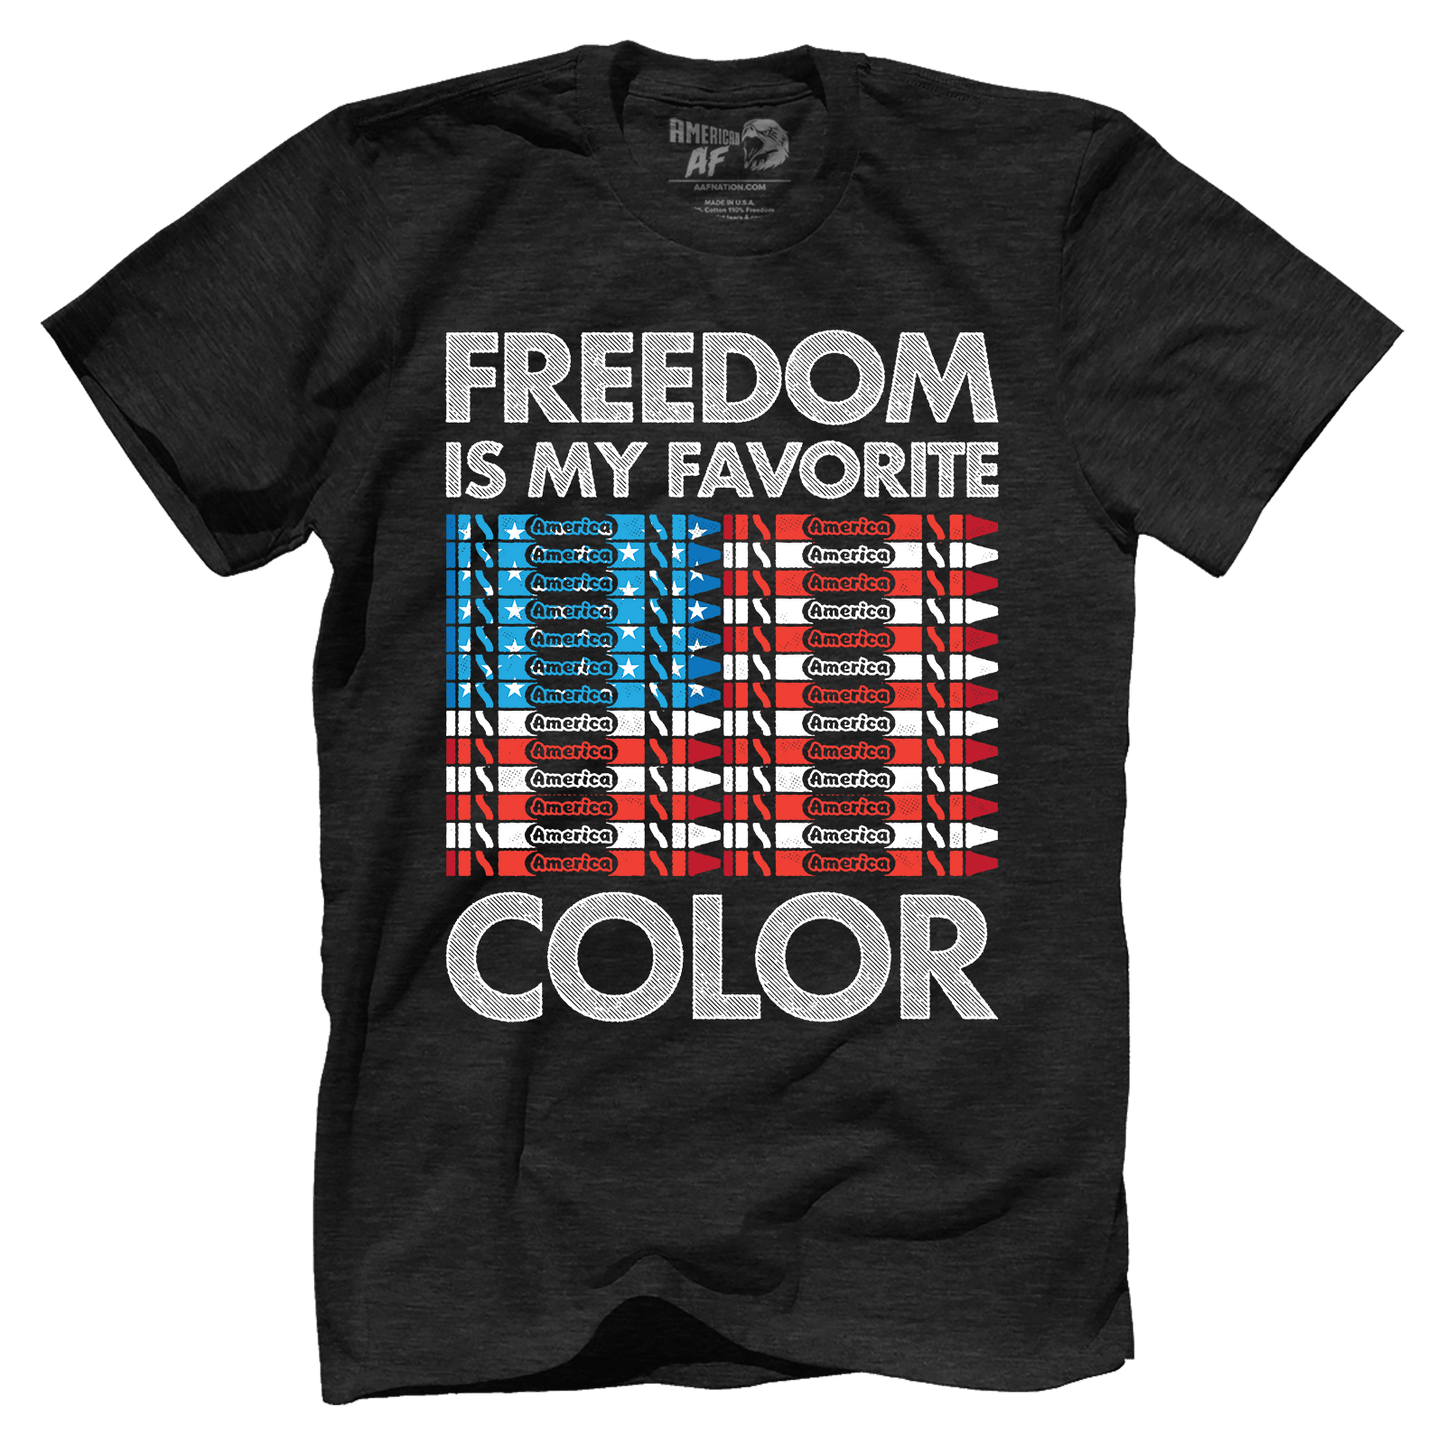 Apparel Premium Mens Triblend Shirt / Vintage Black / S Freedom is my Favorite Color